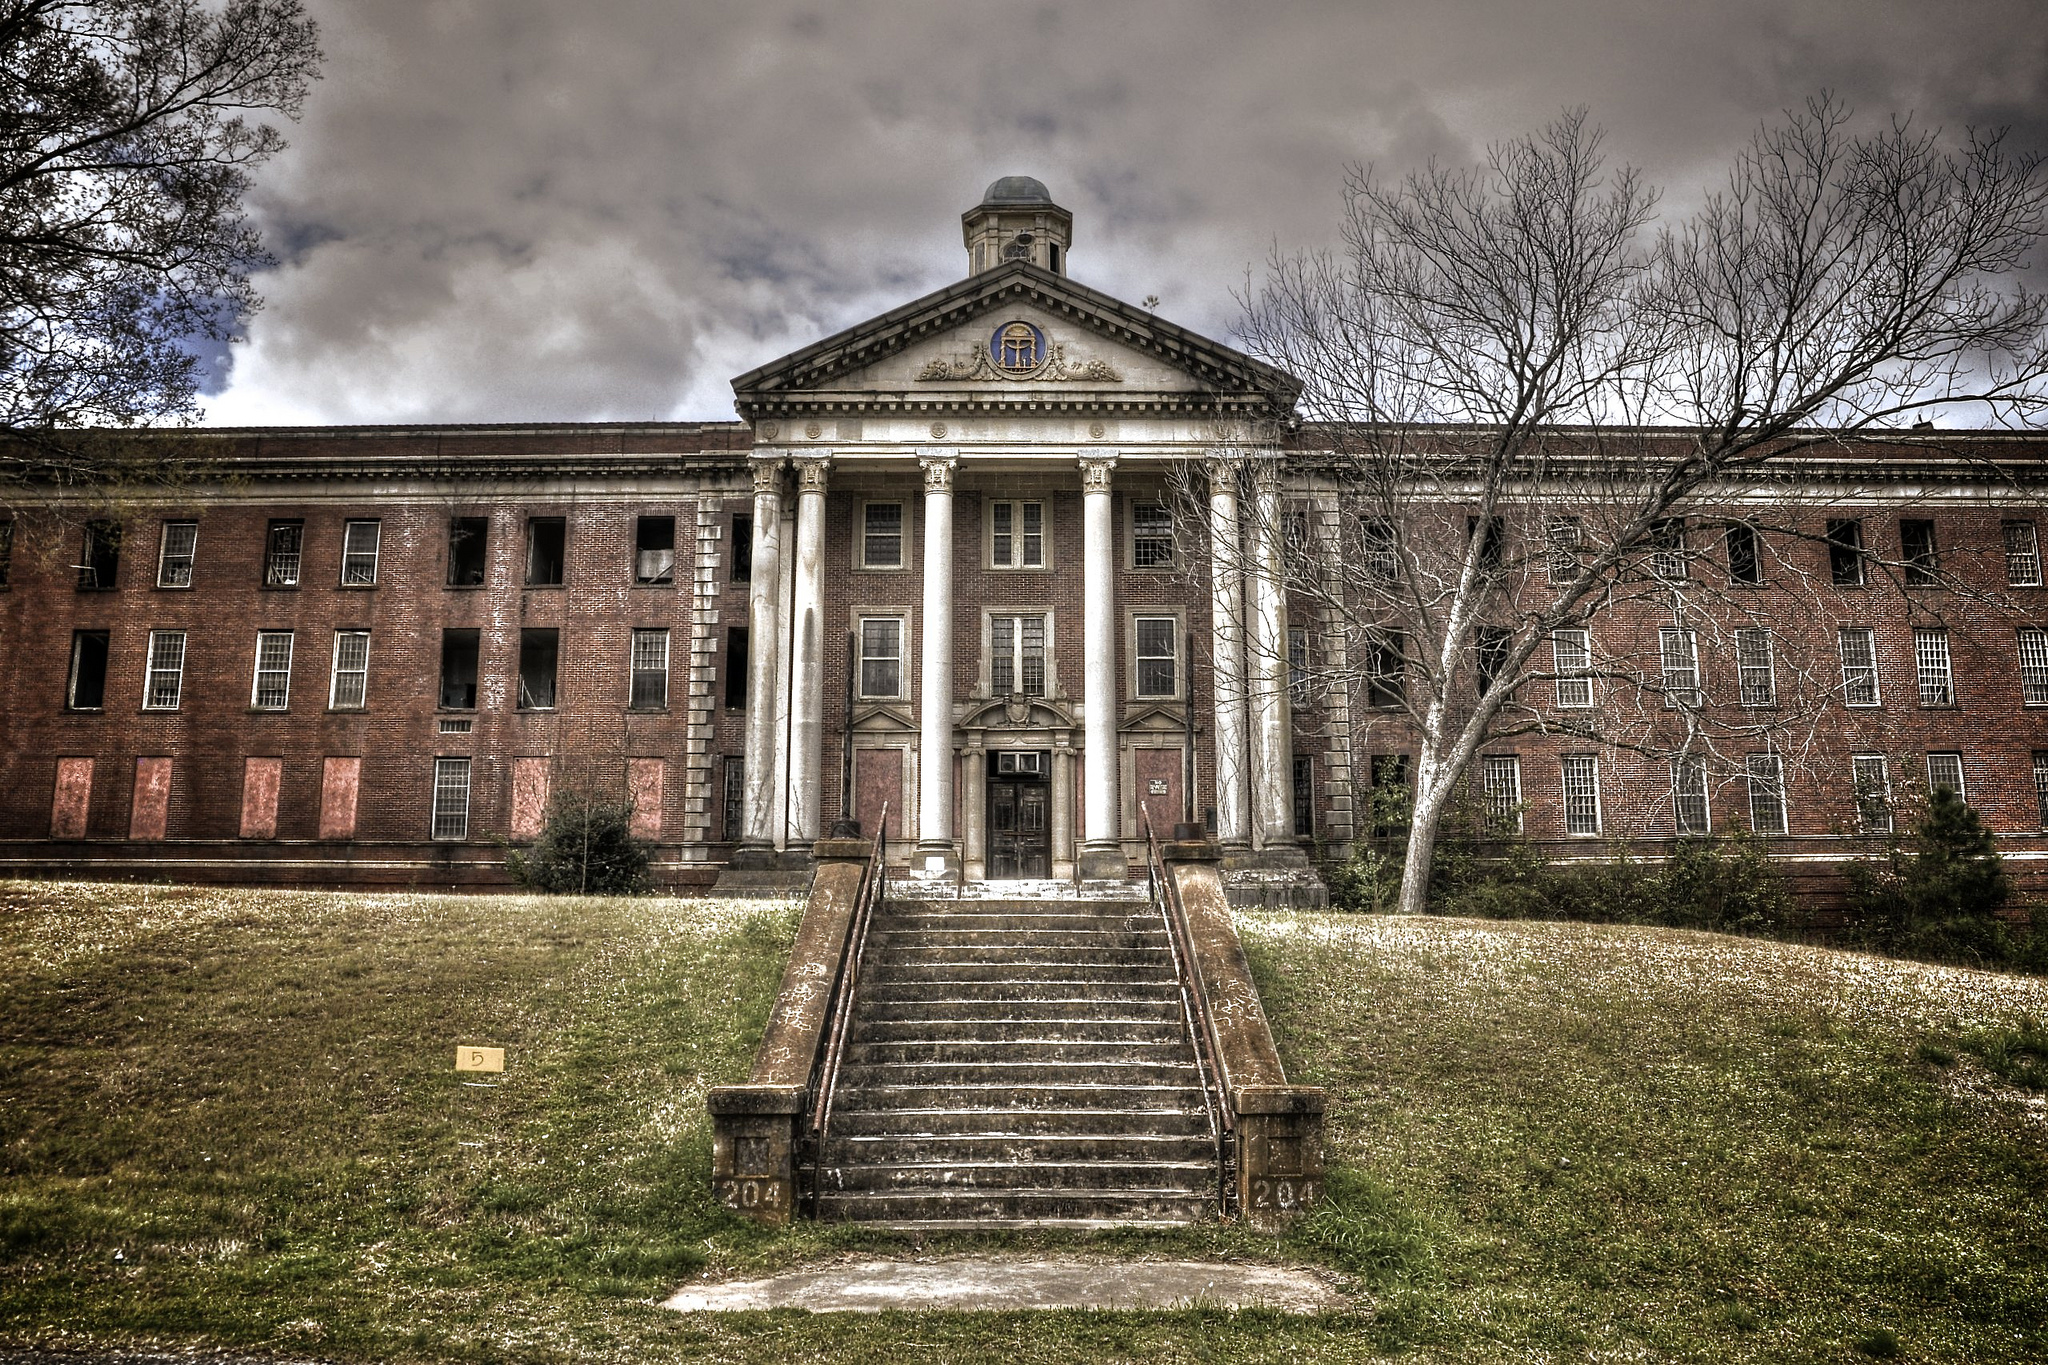 haunted asylum to visit